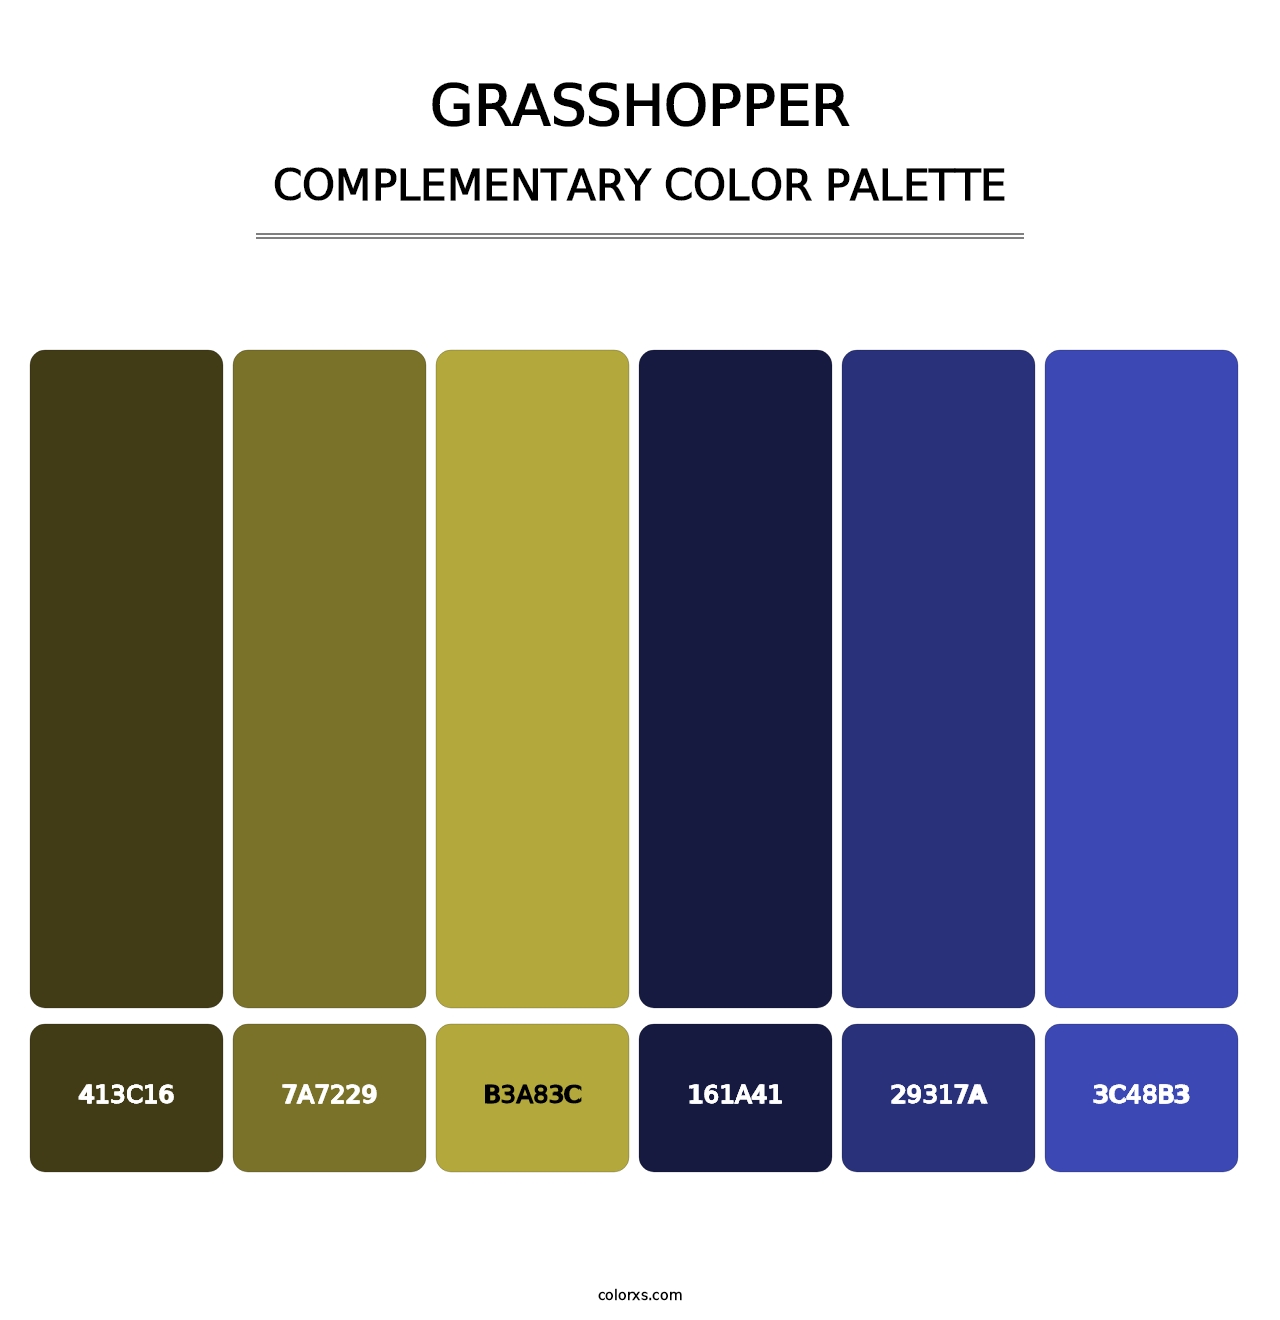 Grasshopper - Complementary Color Palette